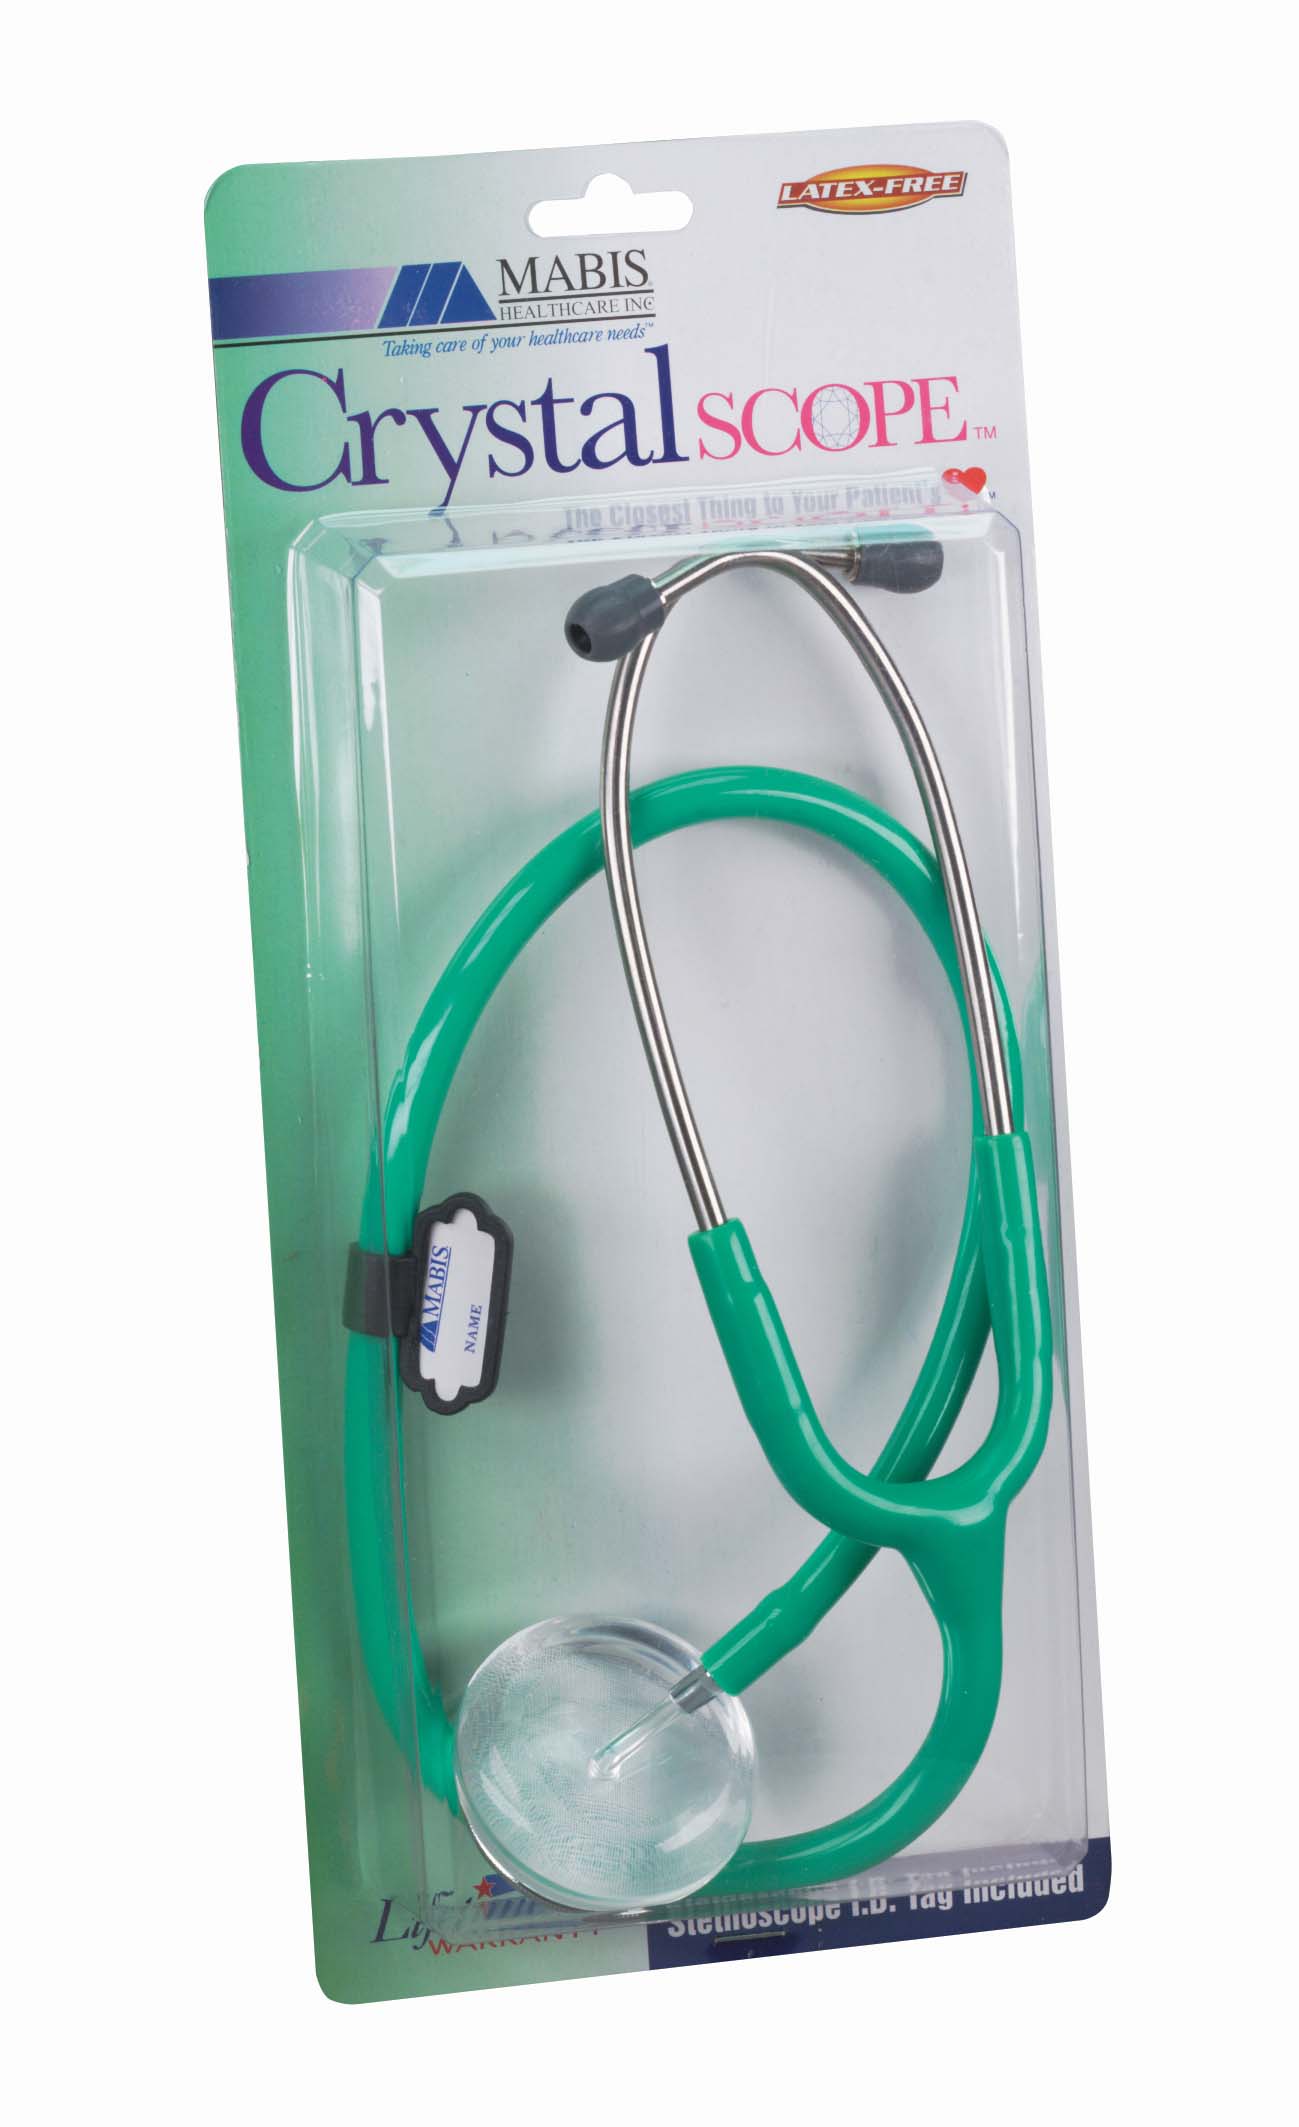 crystalscope-stethoscope-adult-blue-topaz-10-460-290-lr-2.jpg